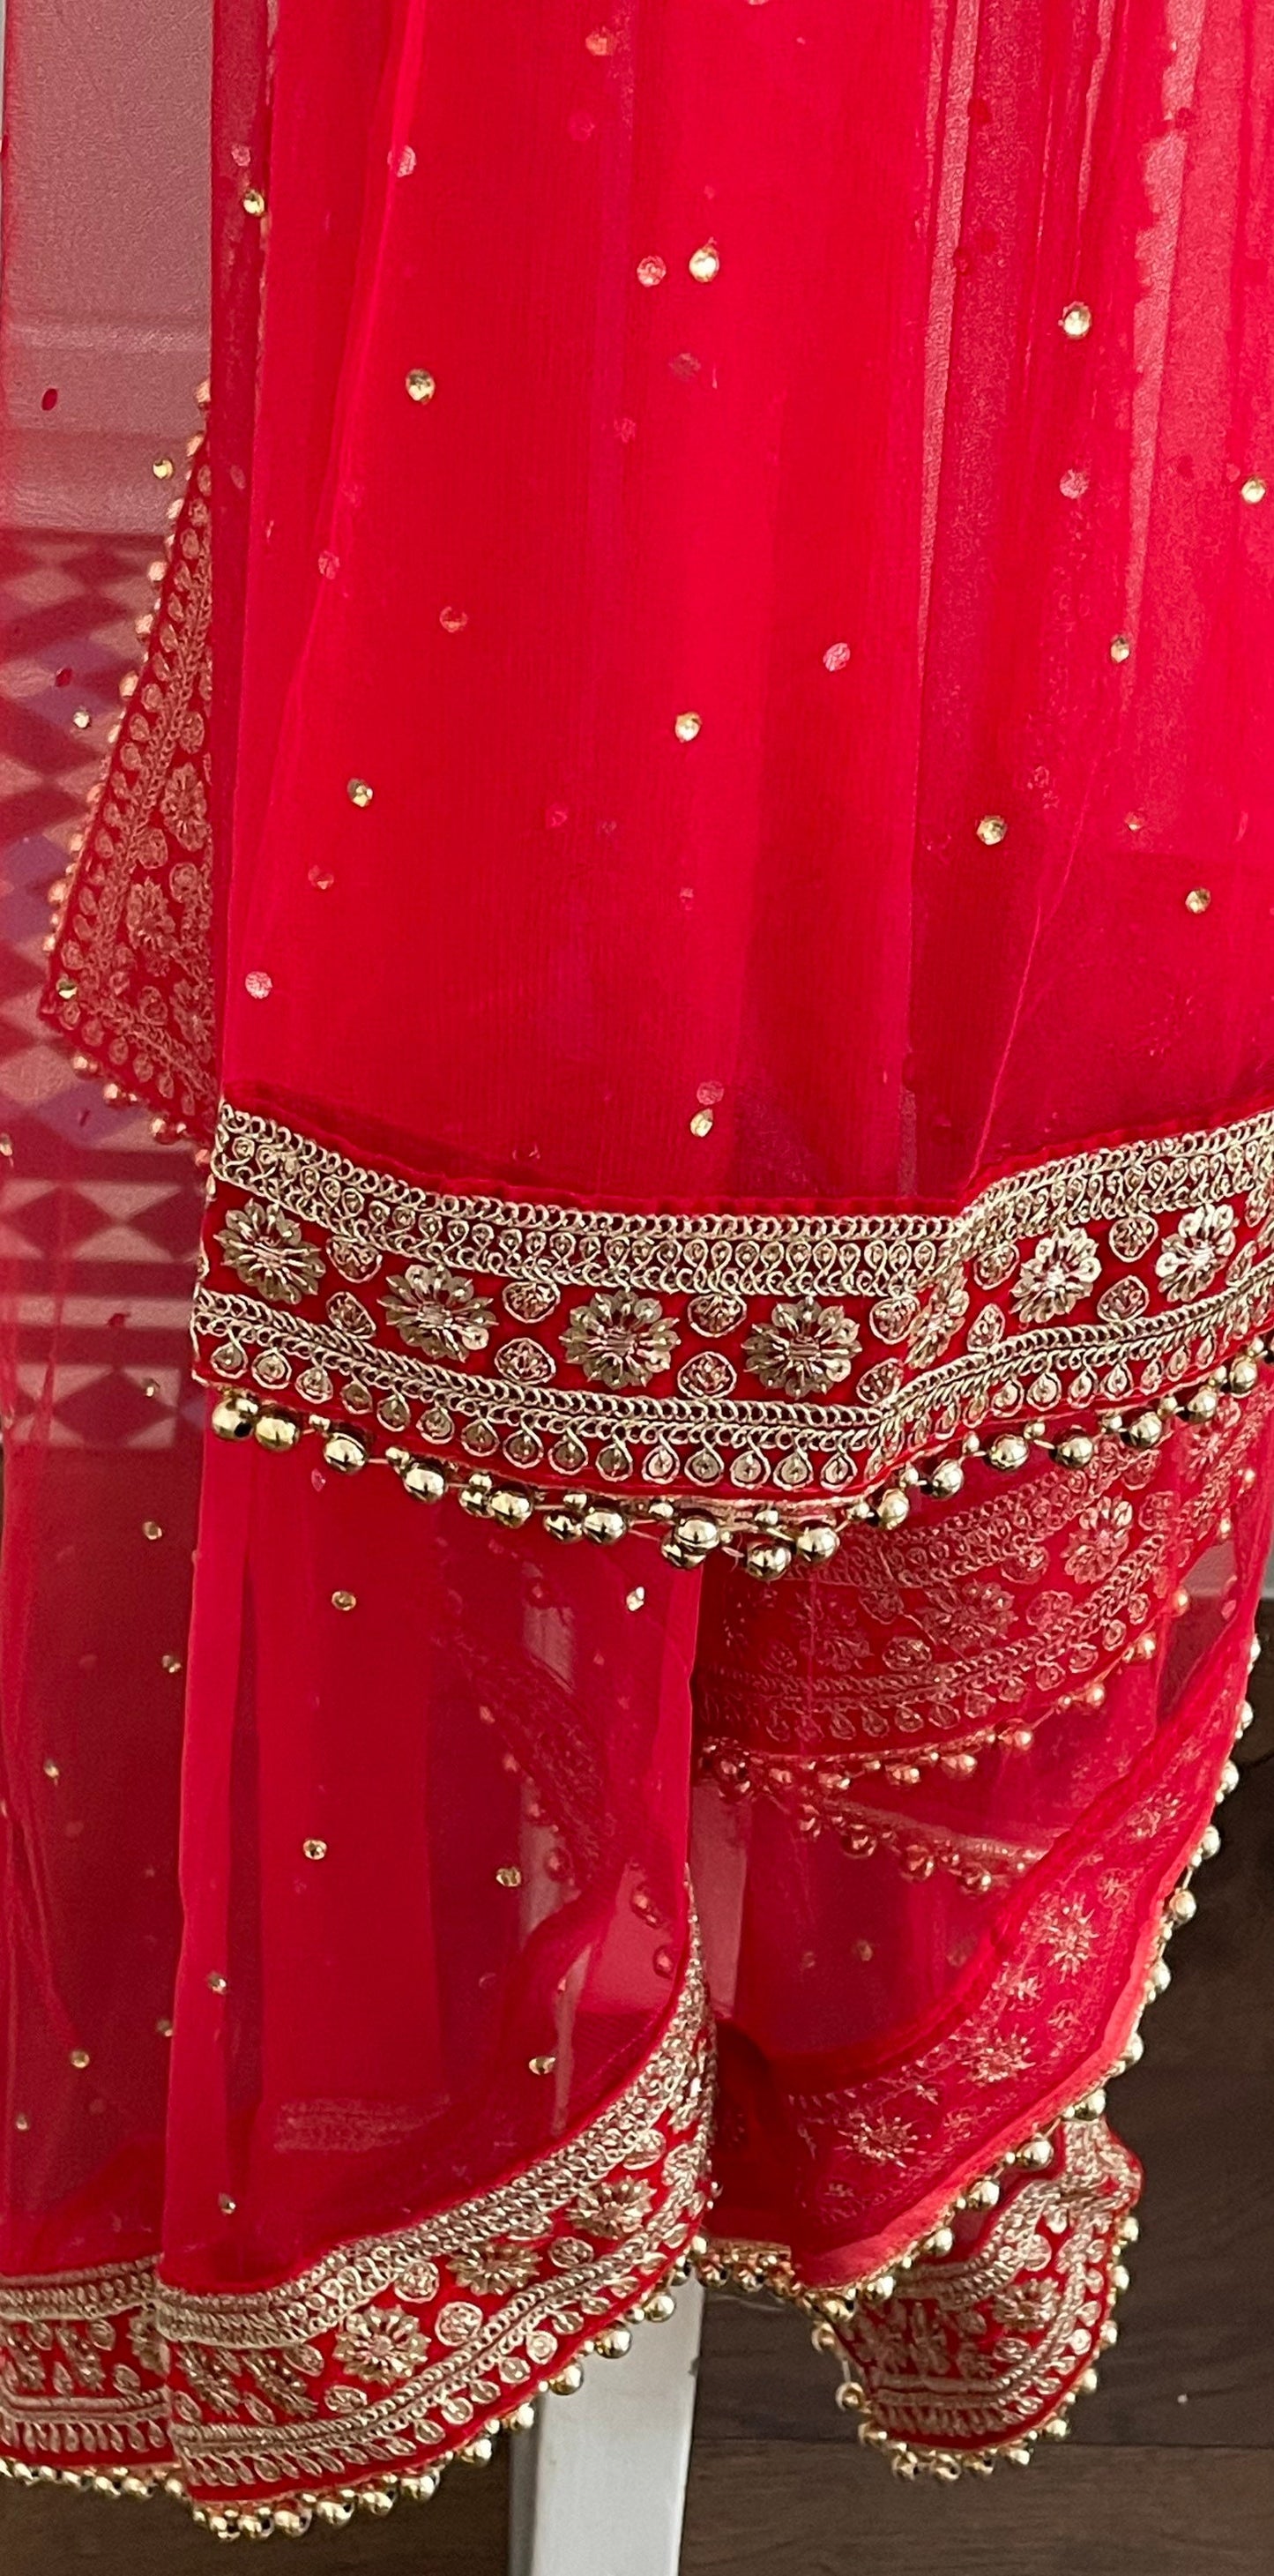 Red Bridal Net Double Second Duppatta for Wedding Outfit Lehenga Chunni Ceremony Sagan Scarf Nikaah Mehendi Mayoon Dholki Indian Odhni